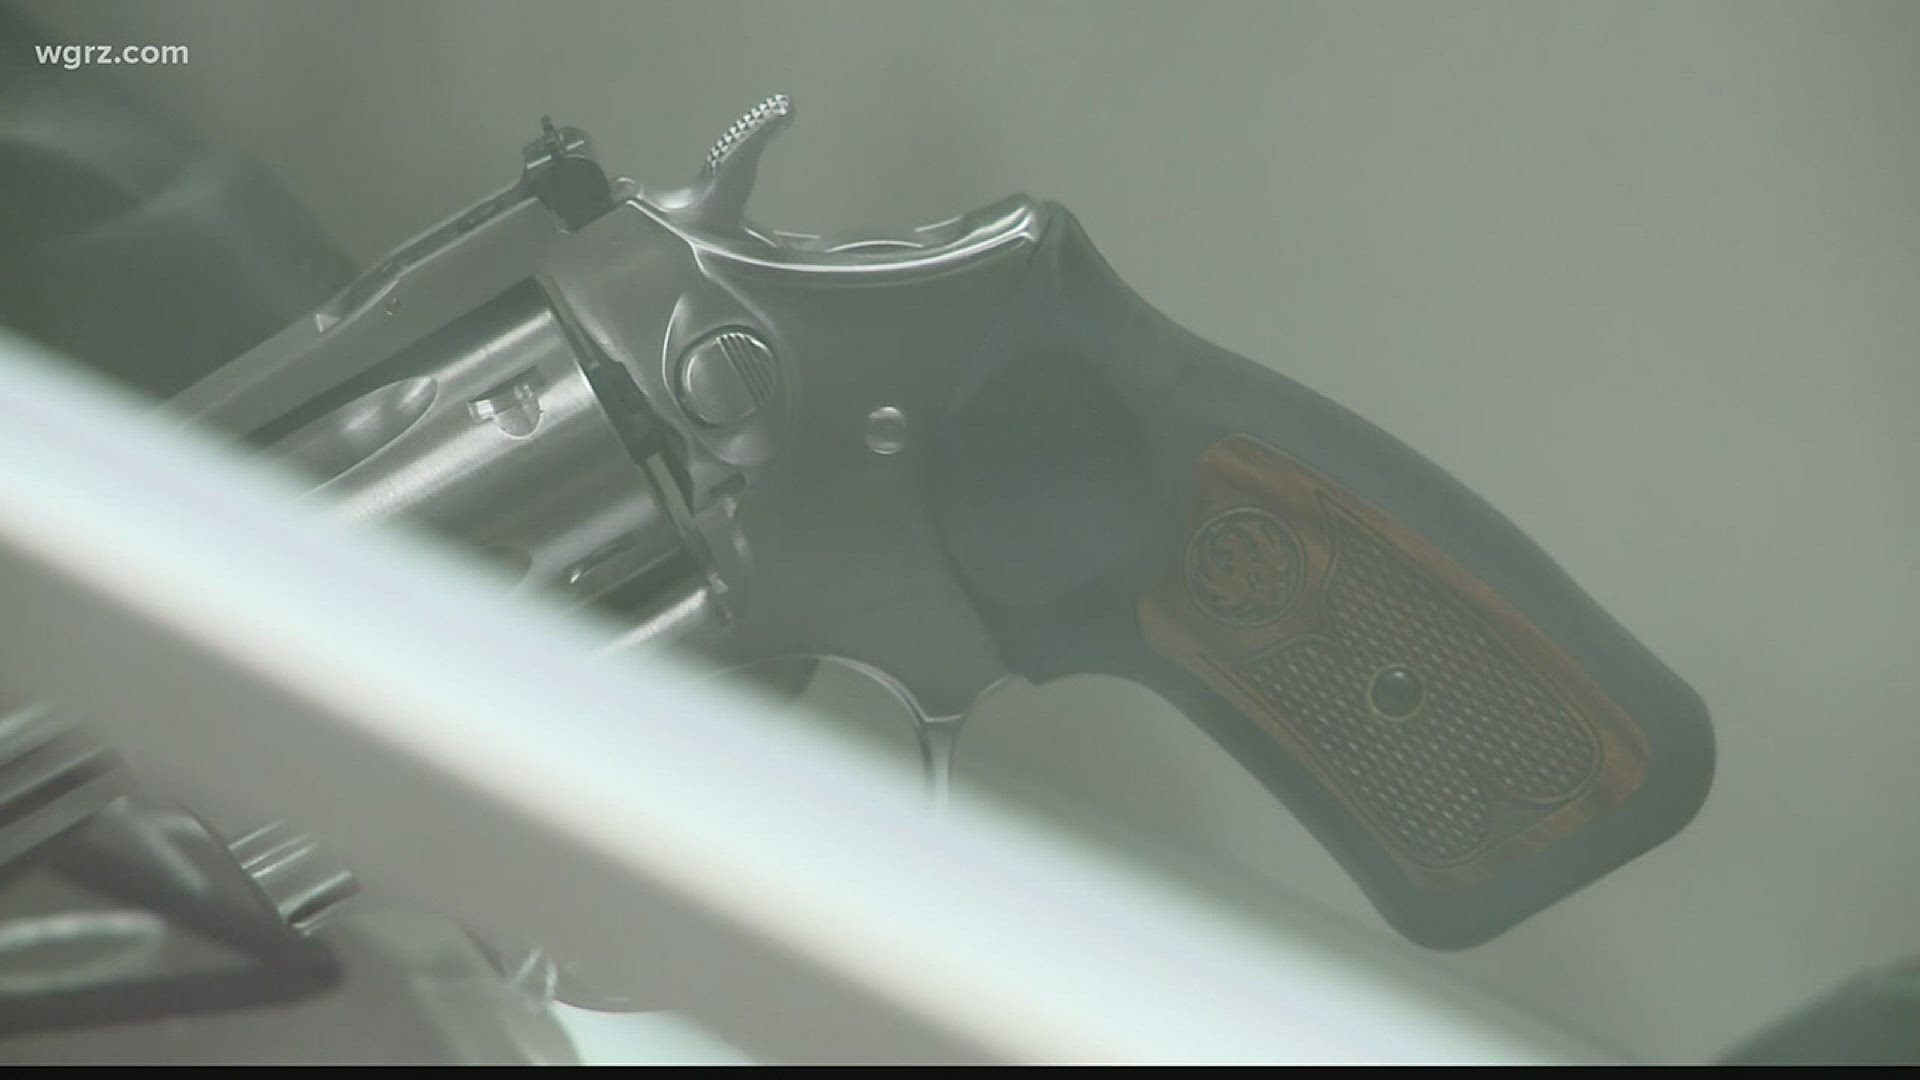 Lawmakers Plans To Introduce Gun Seizure Bill